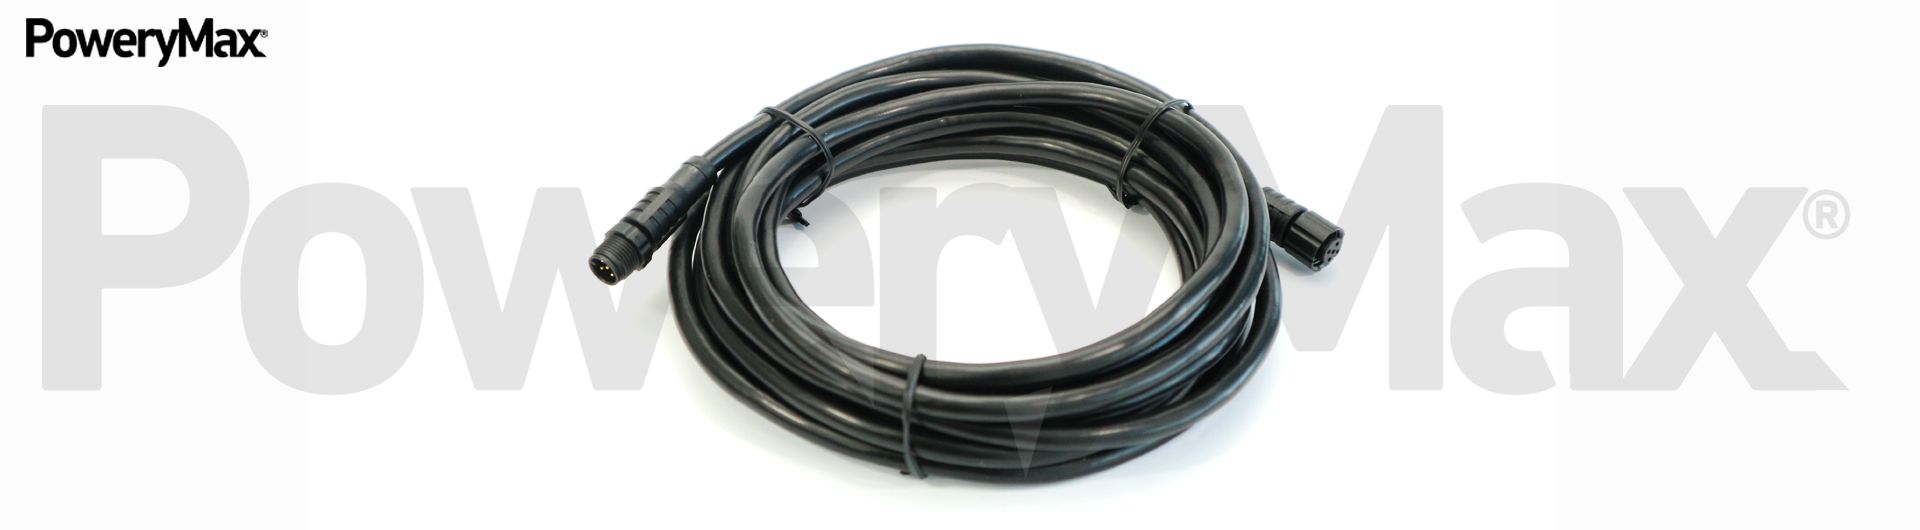 Cable NMEA2000 Powerymax